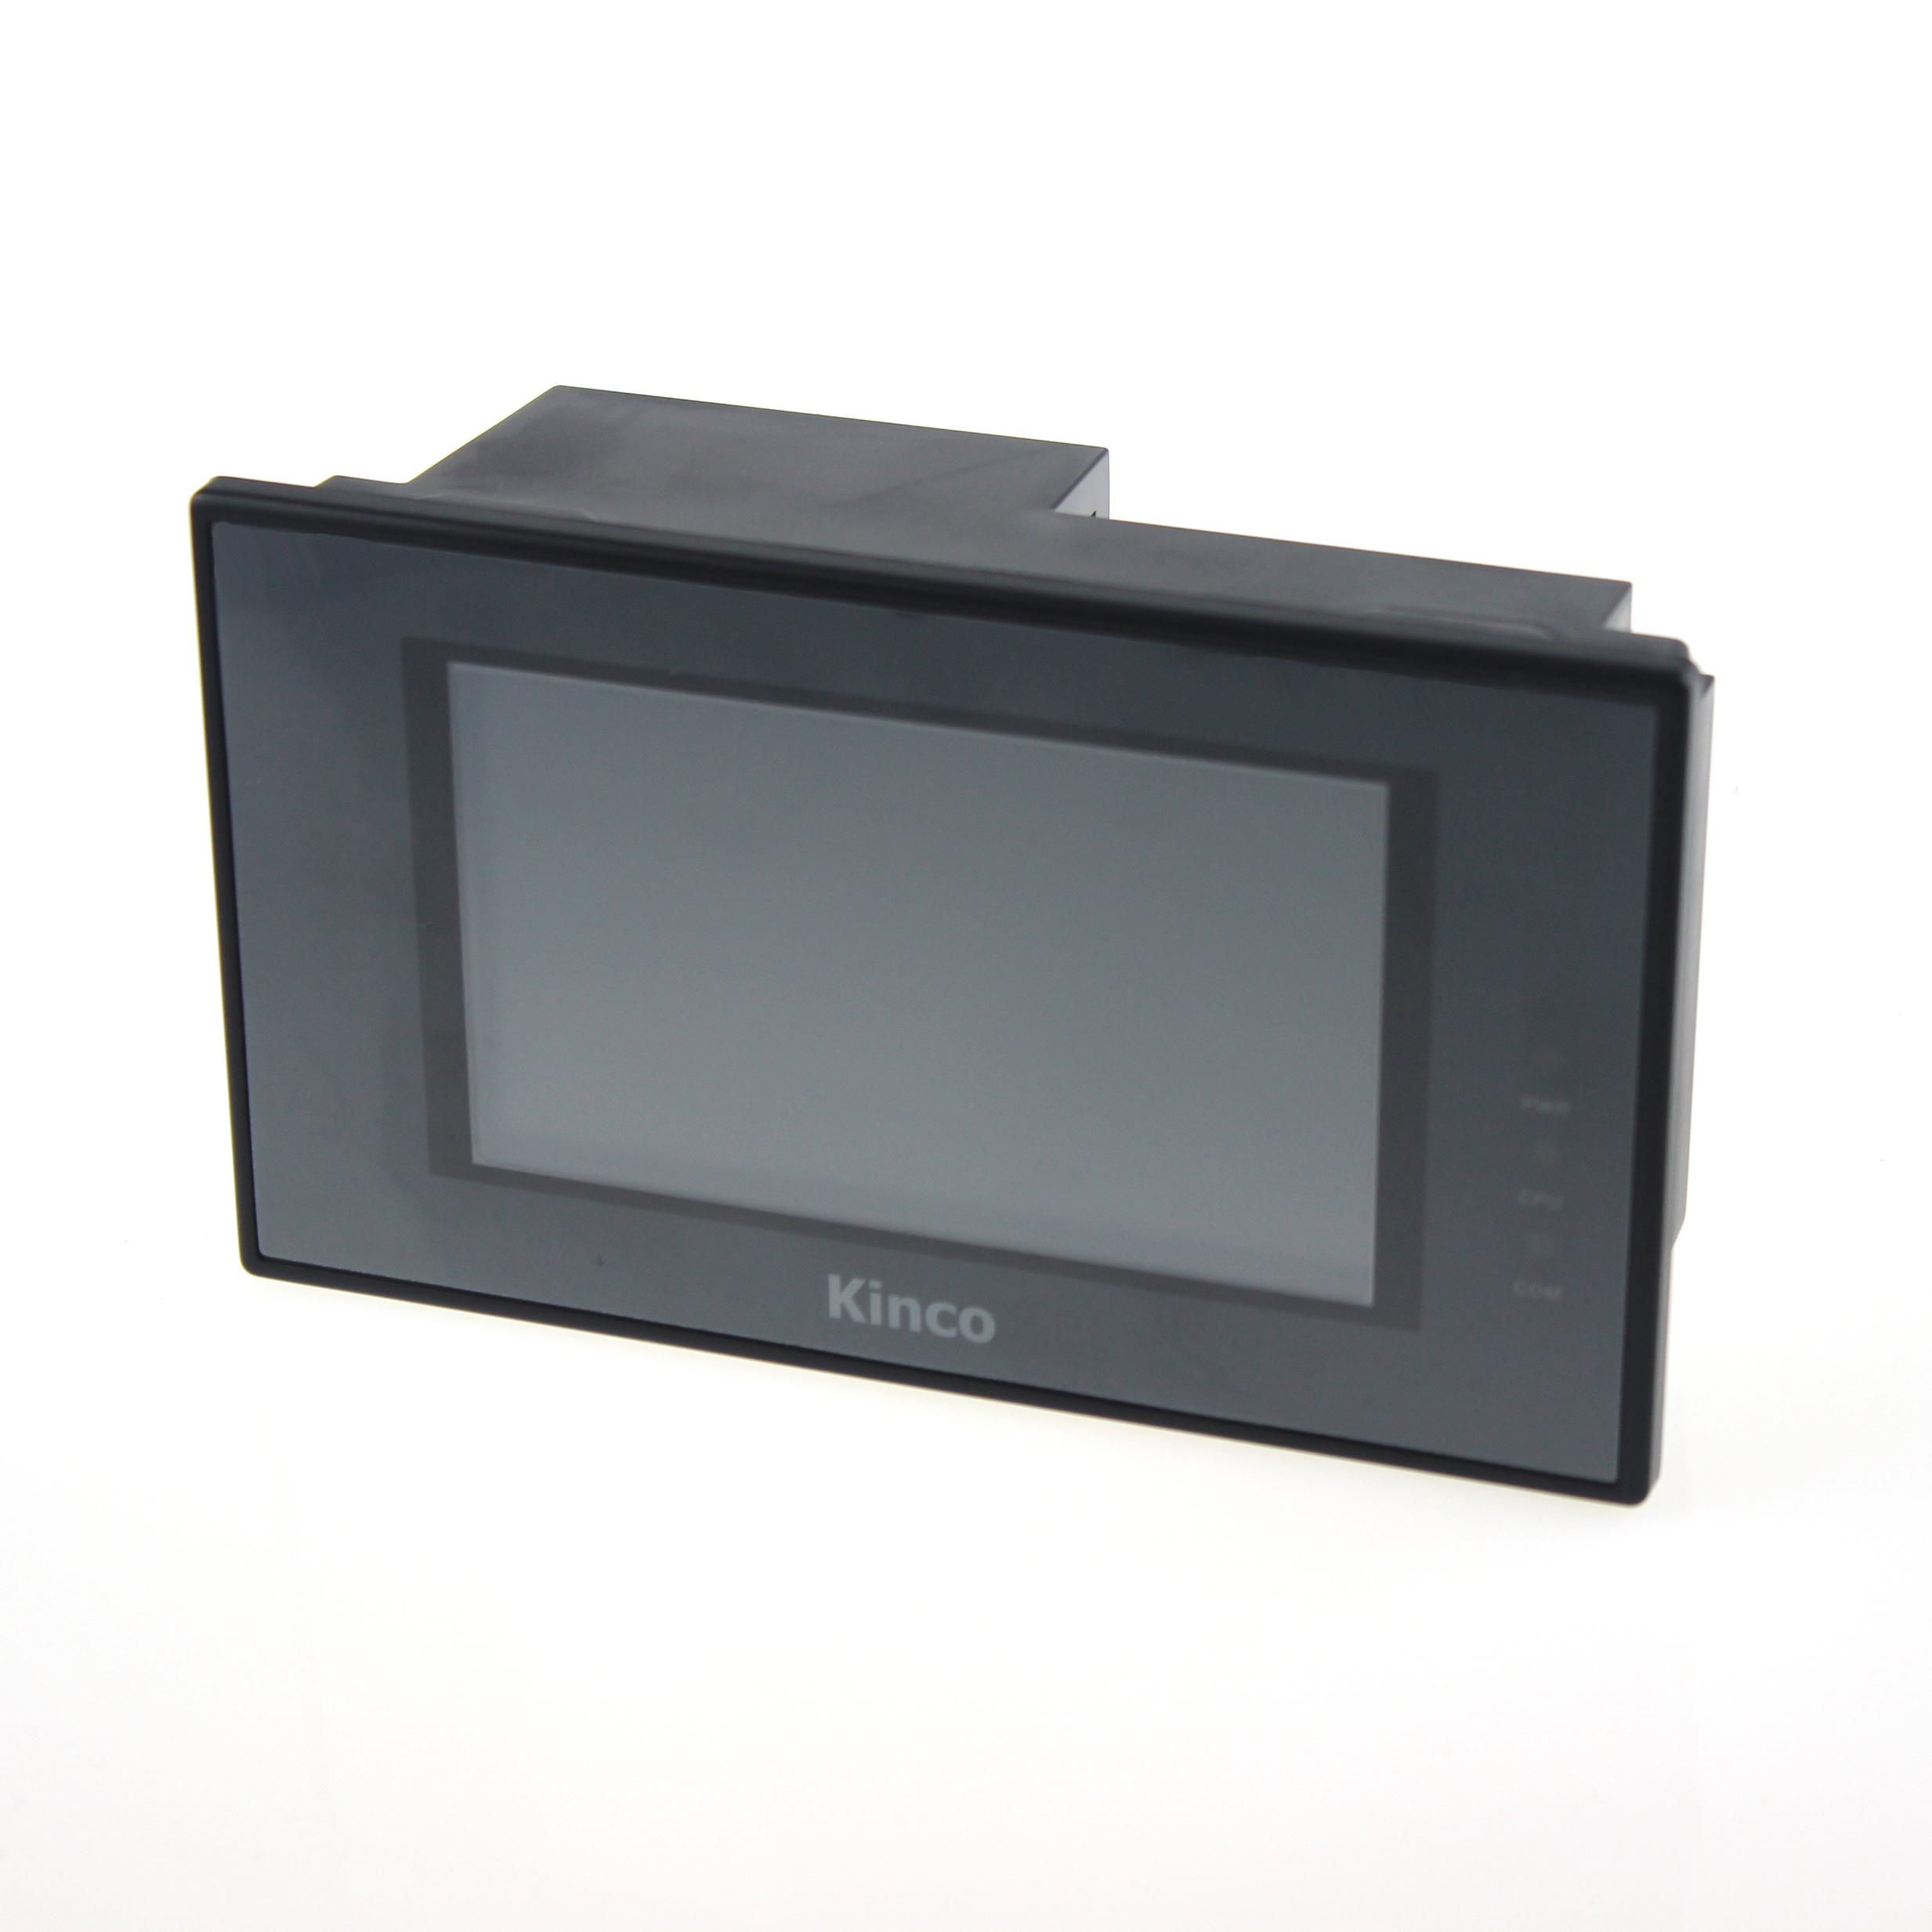 New and Original 4.3" Kinco HMI Mt4220te Touch Panel